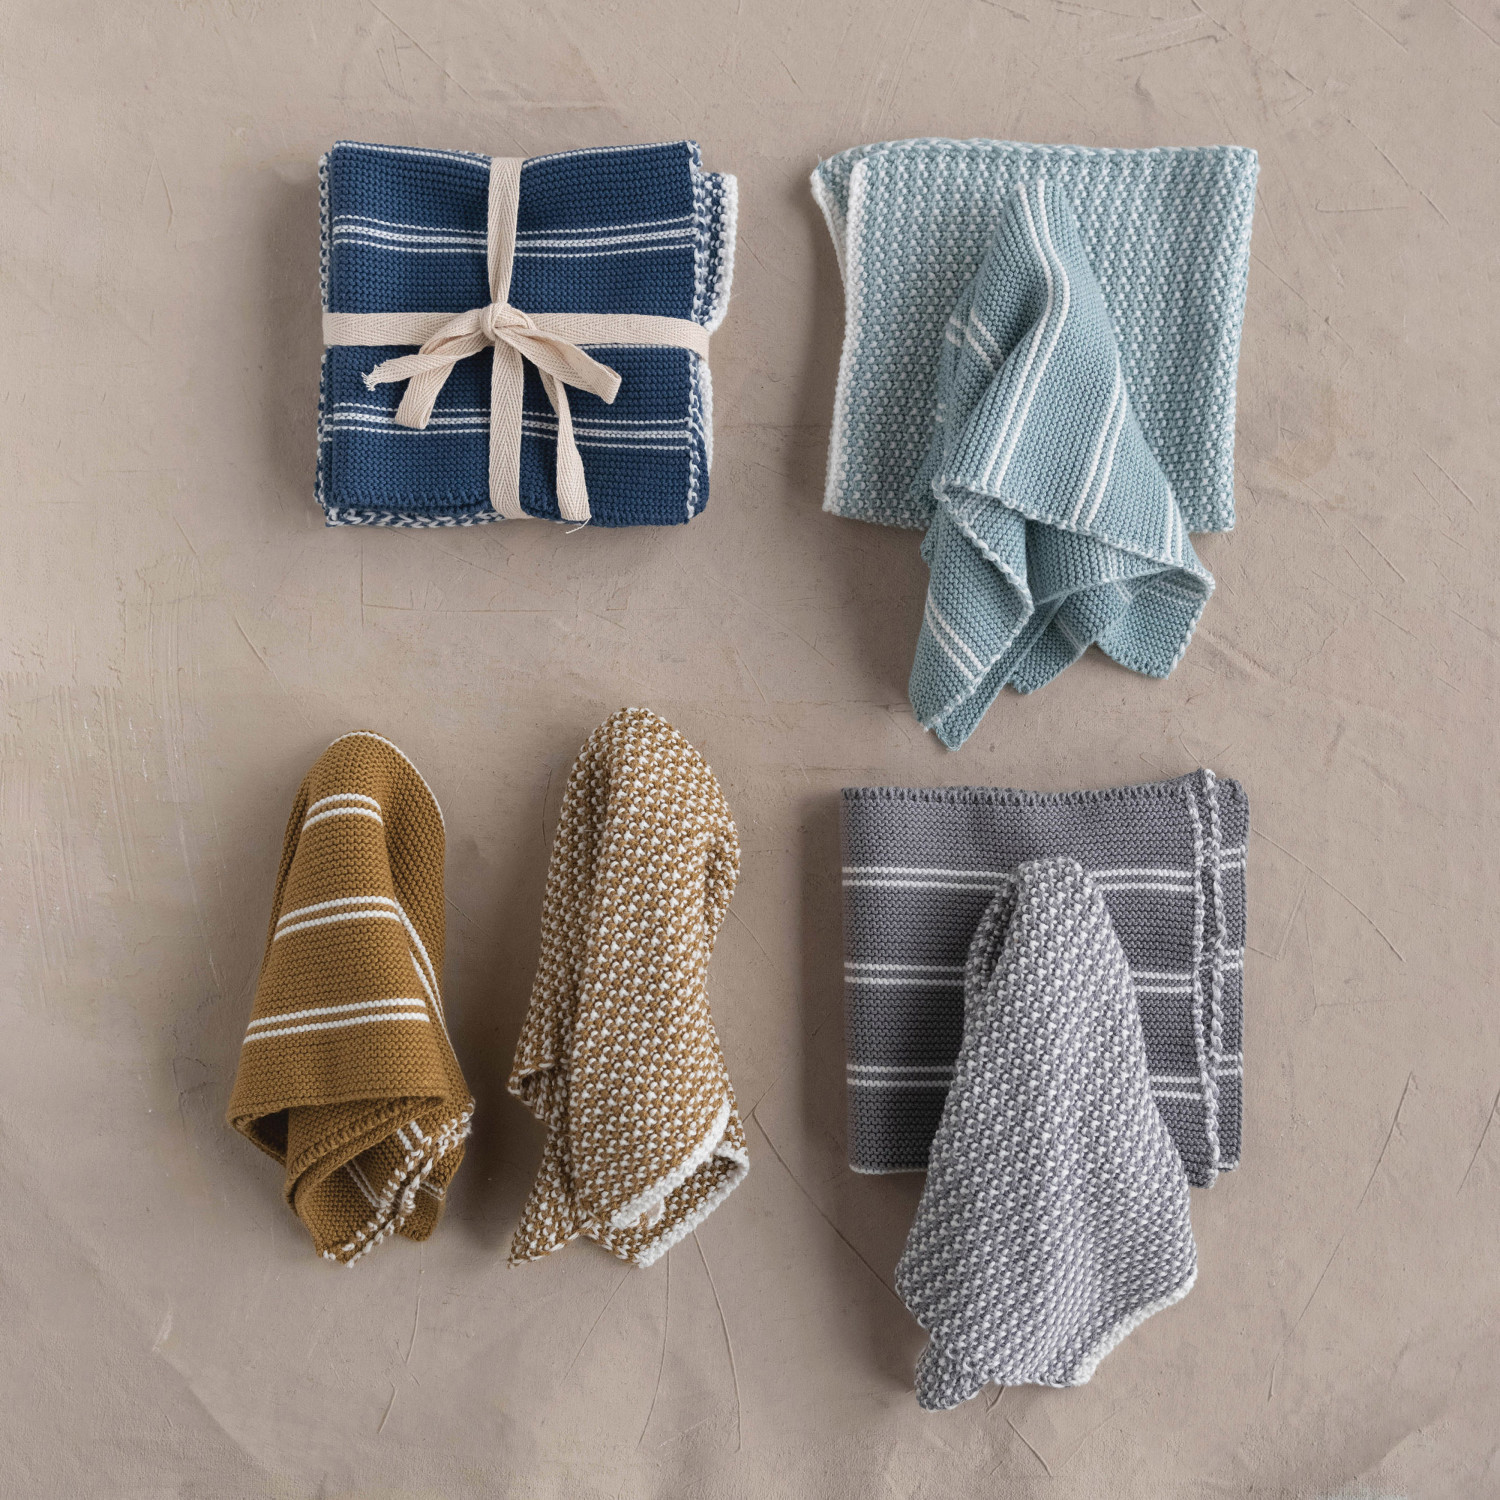 Creative Co-op Cotton Knit Dish Cloths in Cotton Bag